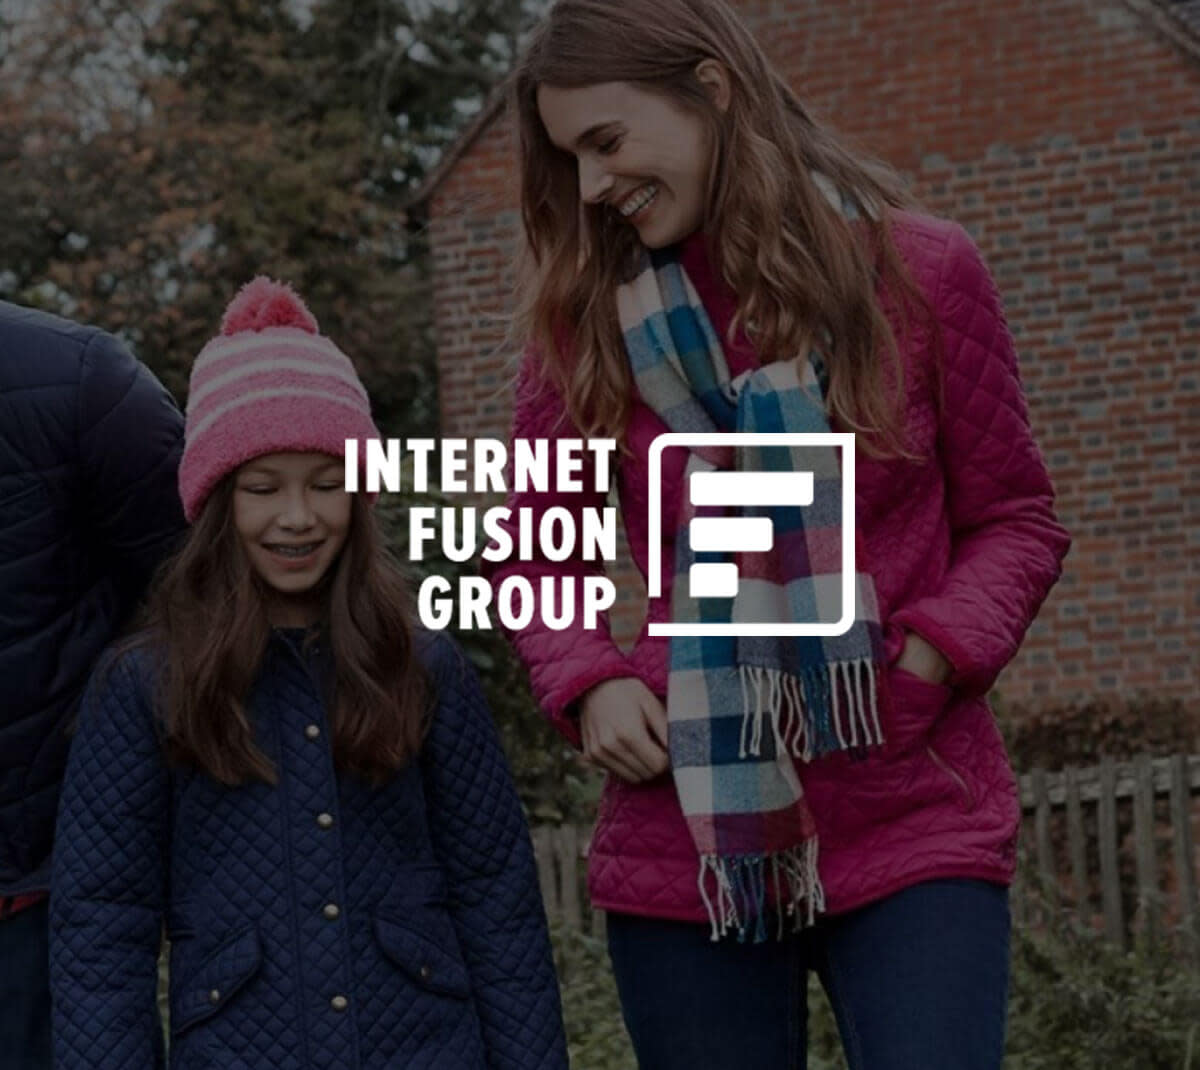 Internet Fusion Group - case study